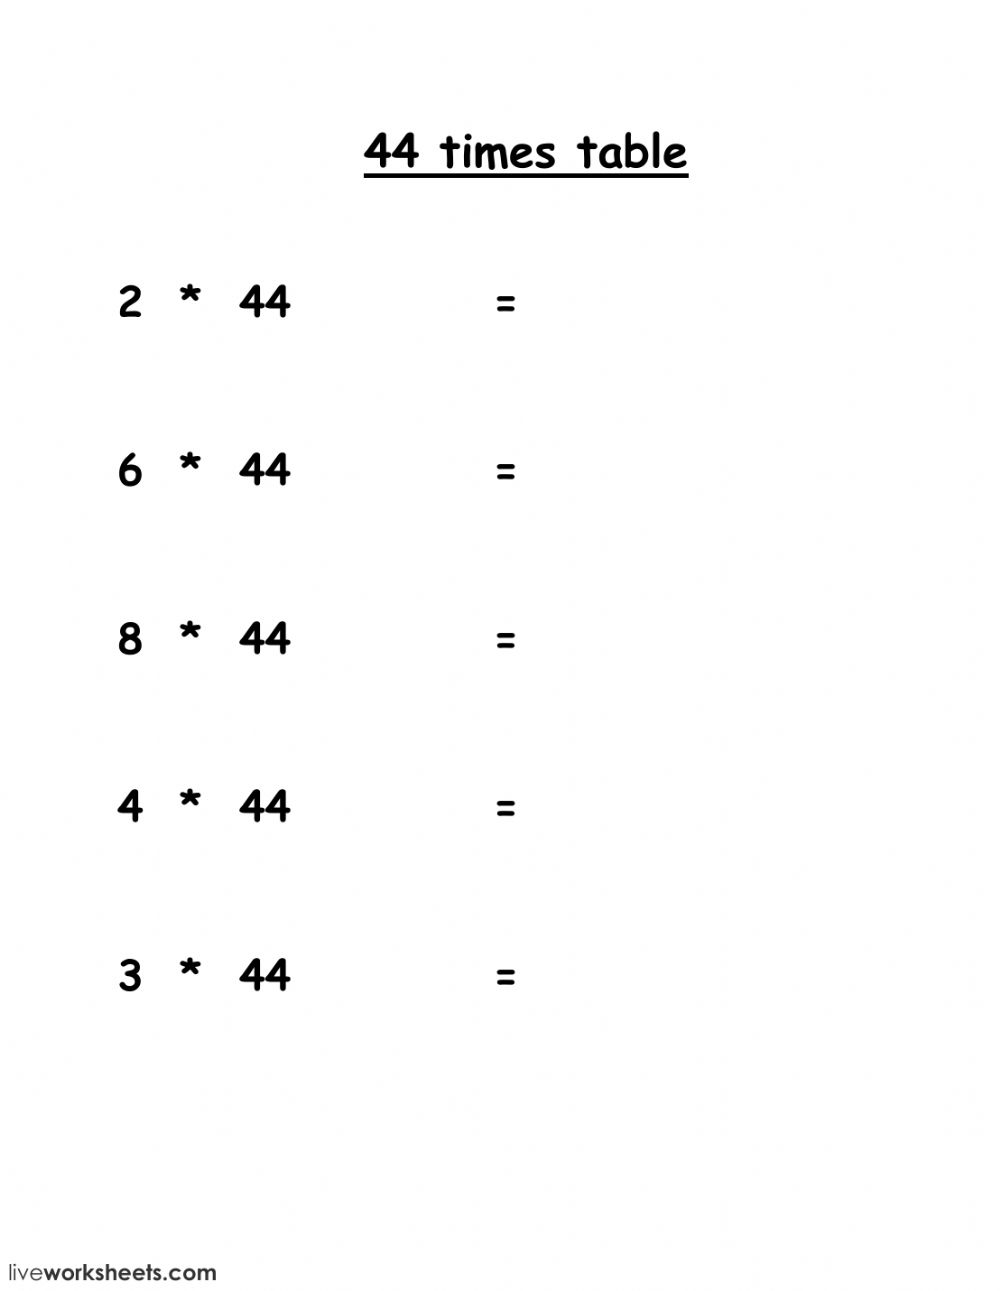 44 Times Table Worksheet